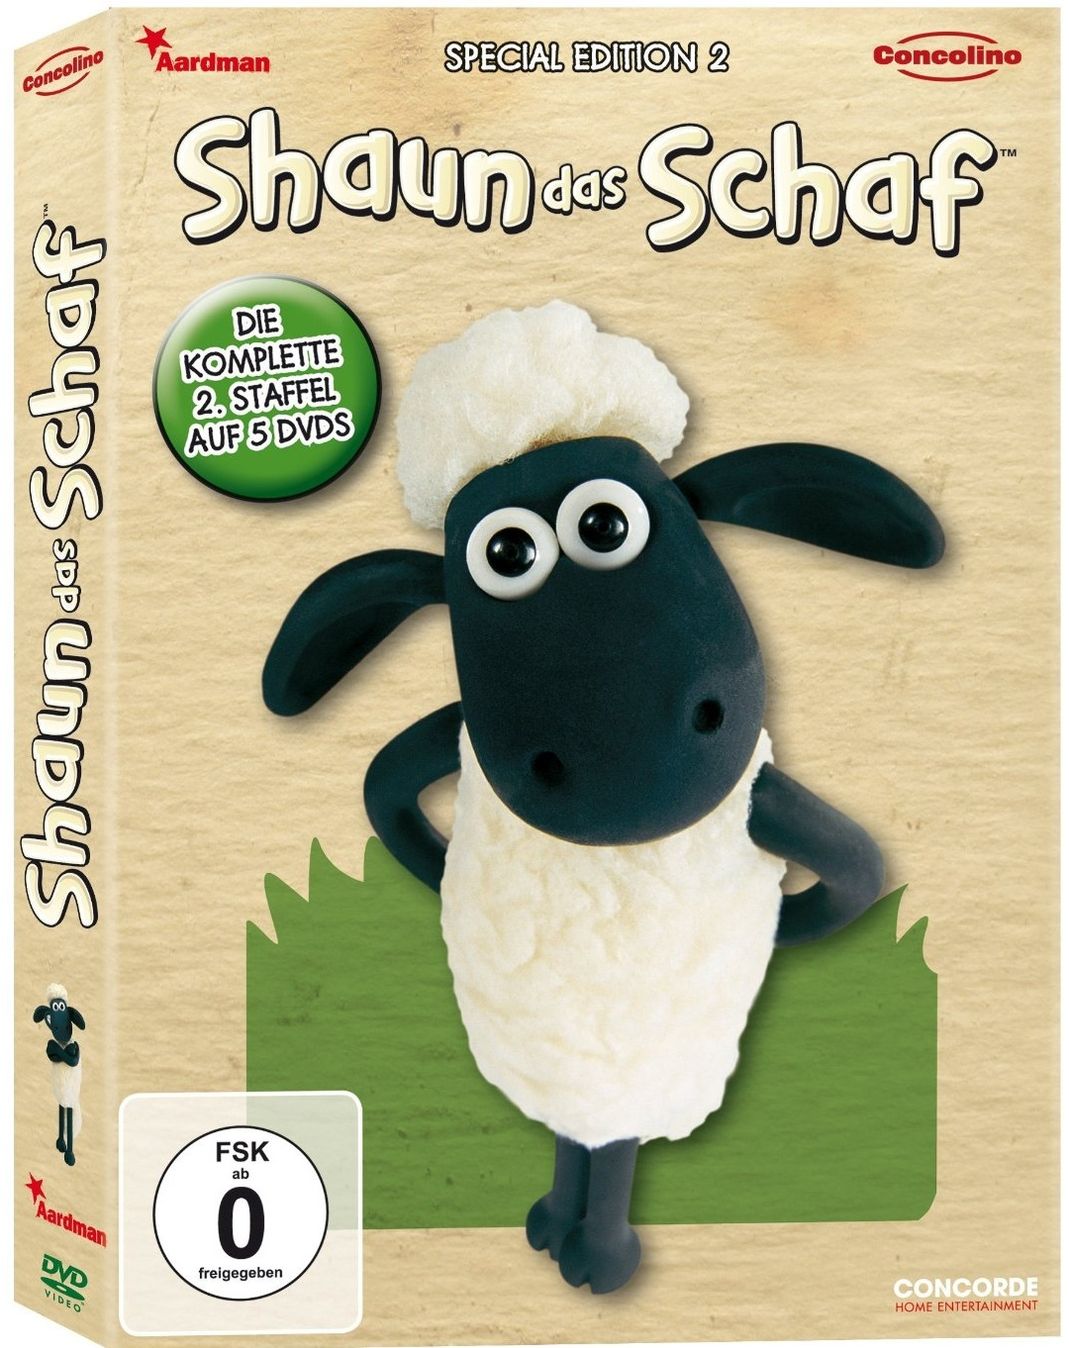 Shaun das Schaf - Special Edition 2 DVD bei Weltbild.de bestellen